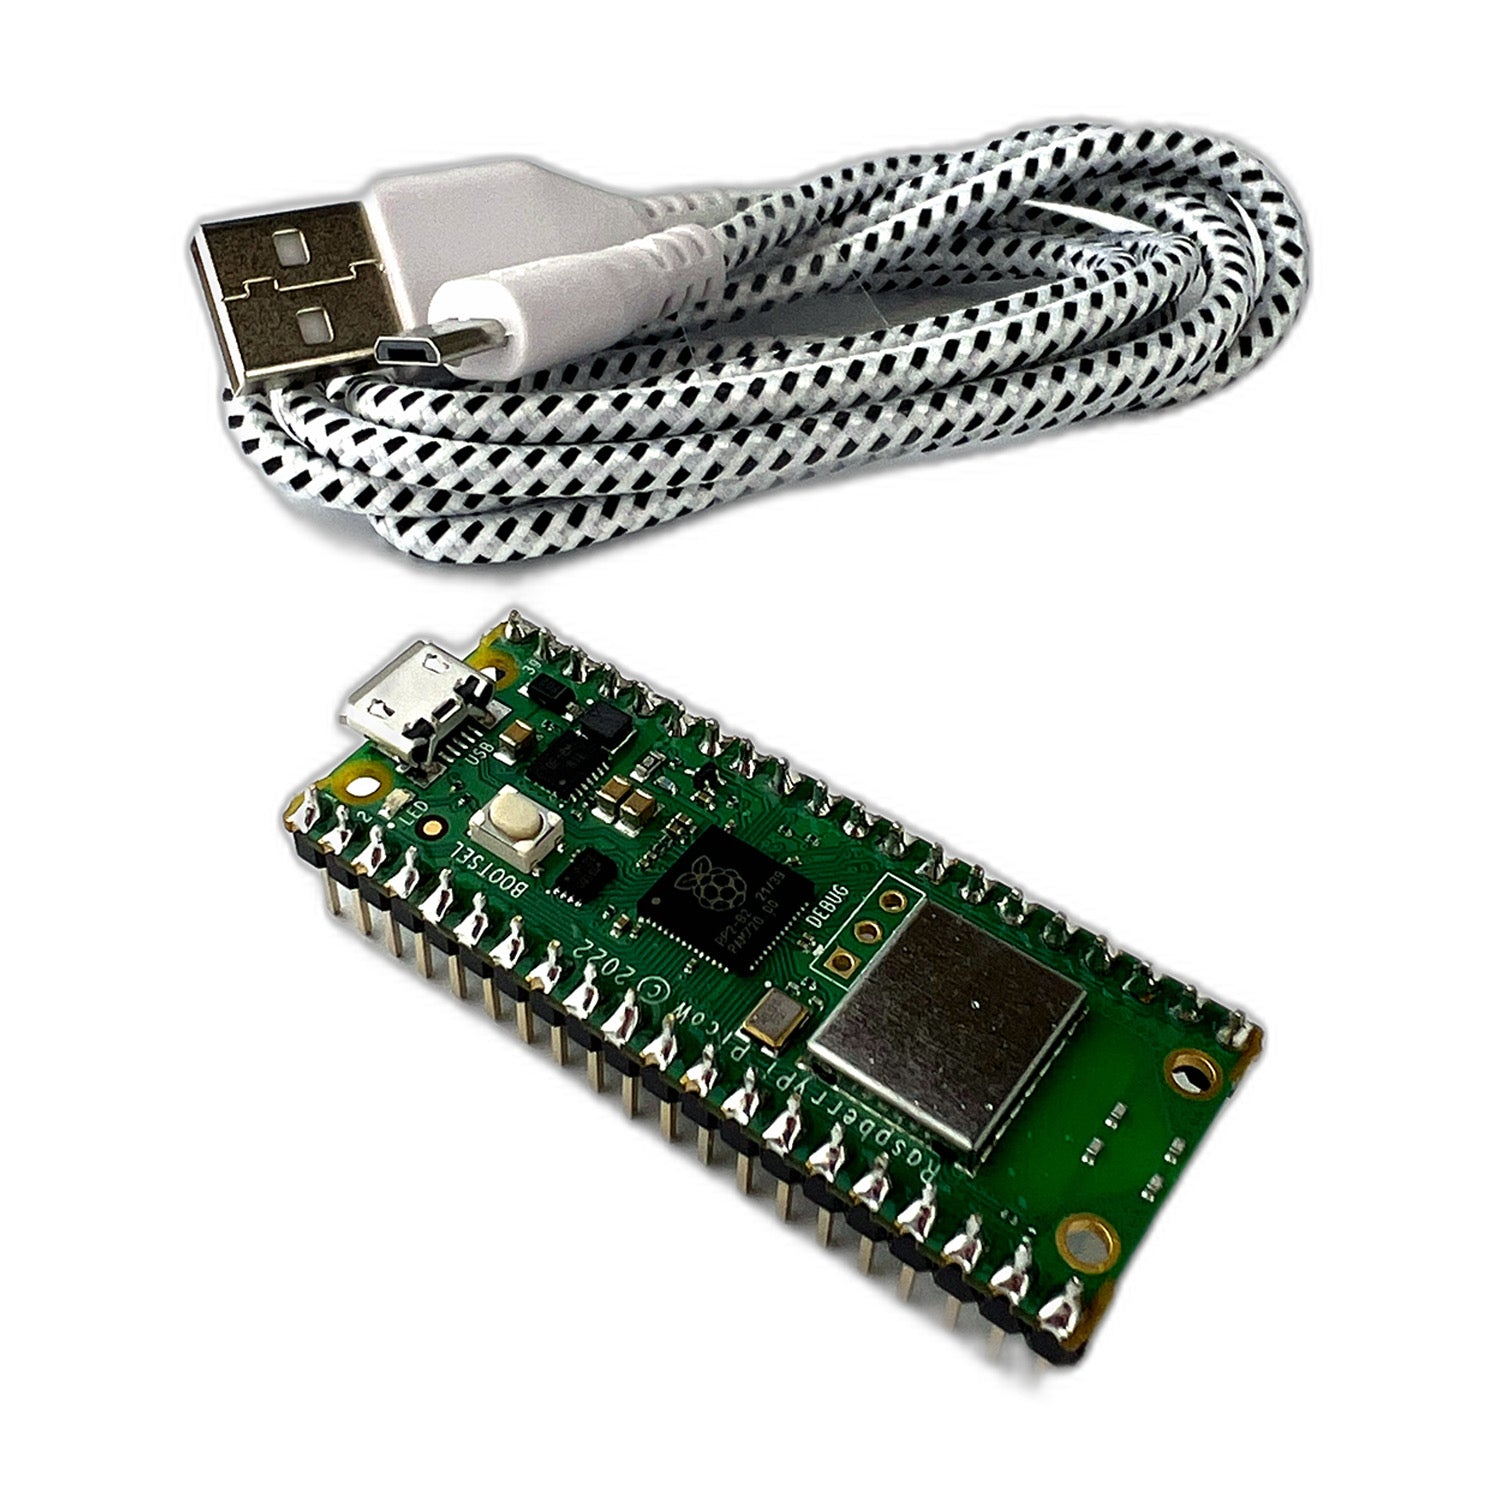 USB 2.0 Powered 10 Port Slimline Hub + Charger – Pi Australia